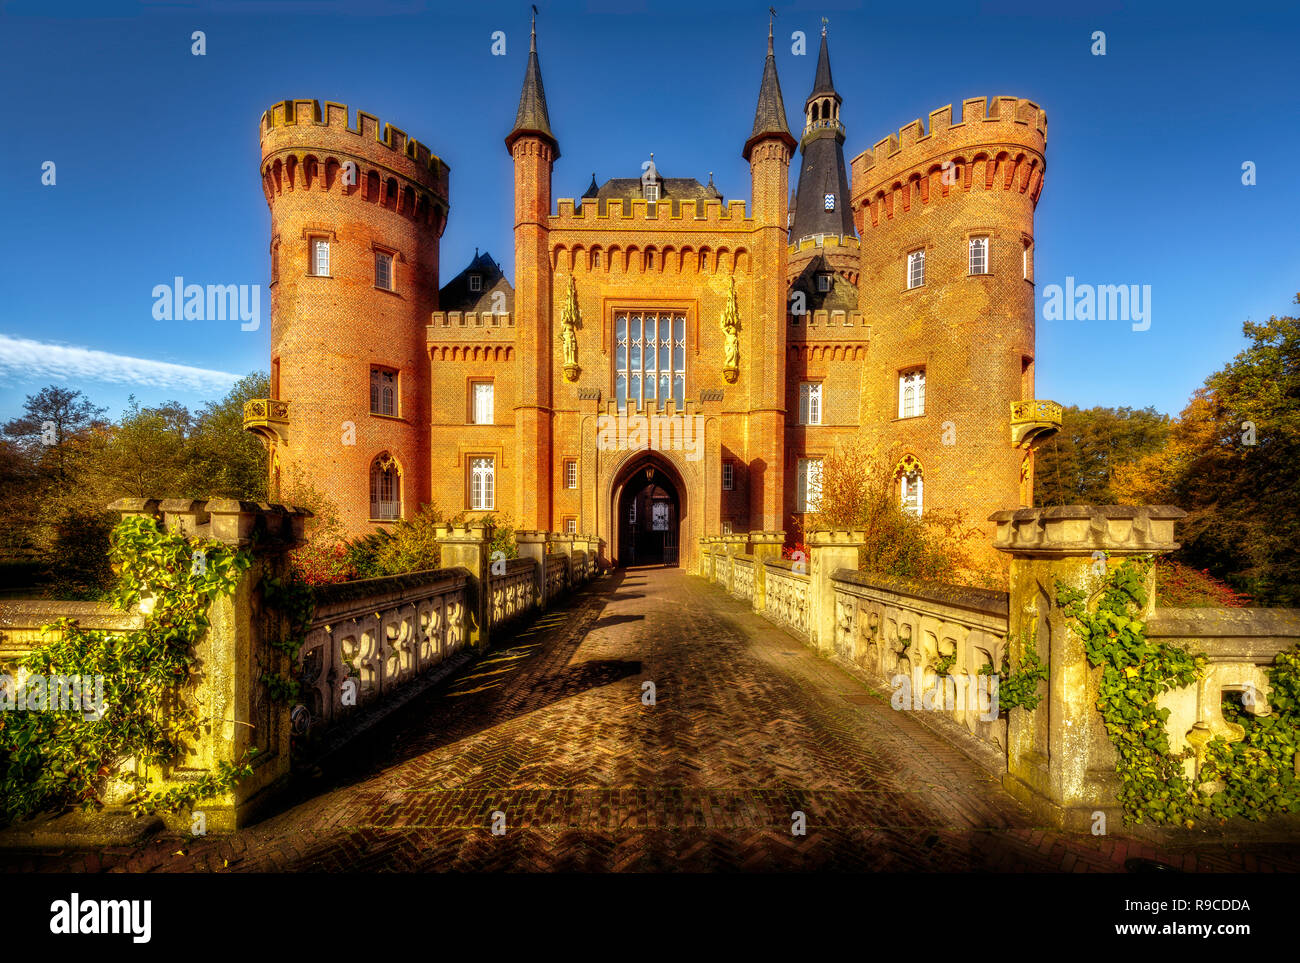 Schloss Moyland, Bedburg-Hau, Deutschland Stockfoto